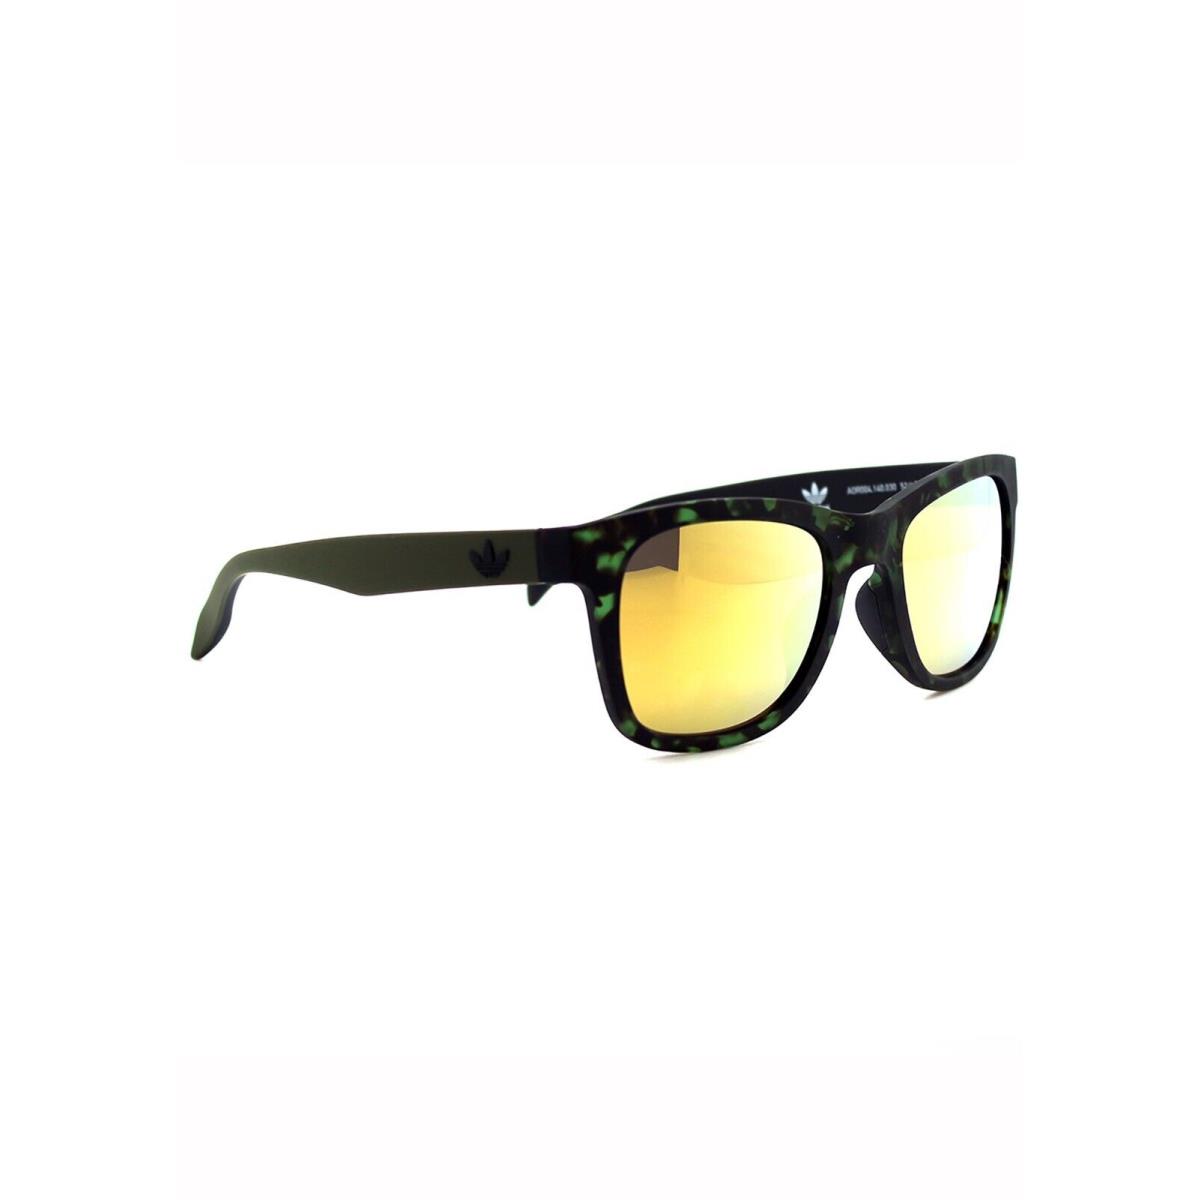 Adidas Square Mirror 2.0 Sunglasses in Green Tortoise/gold Cute